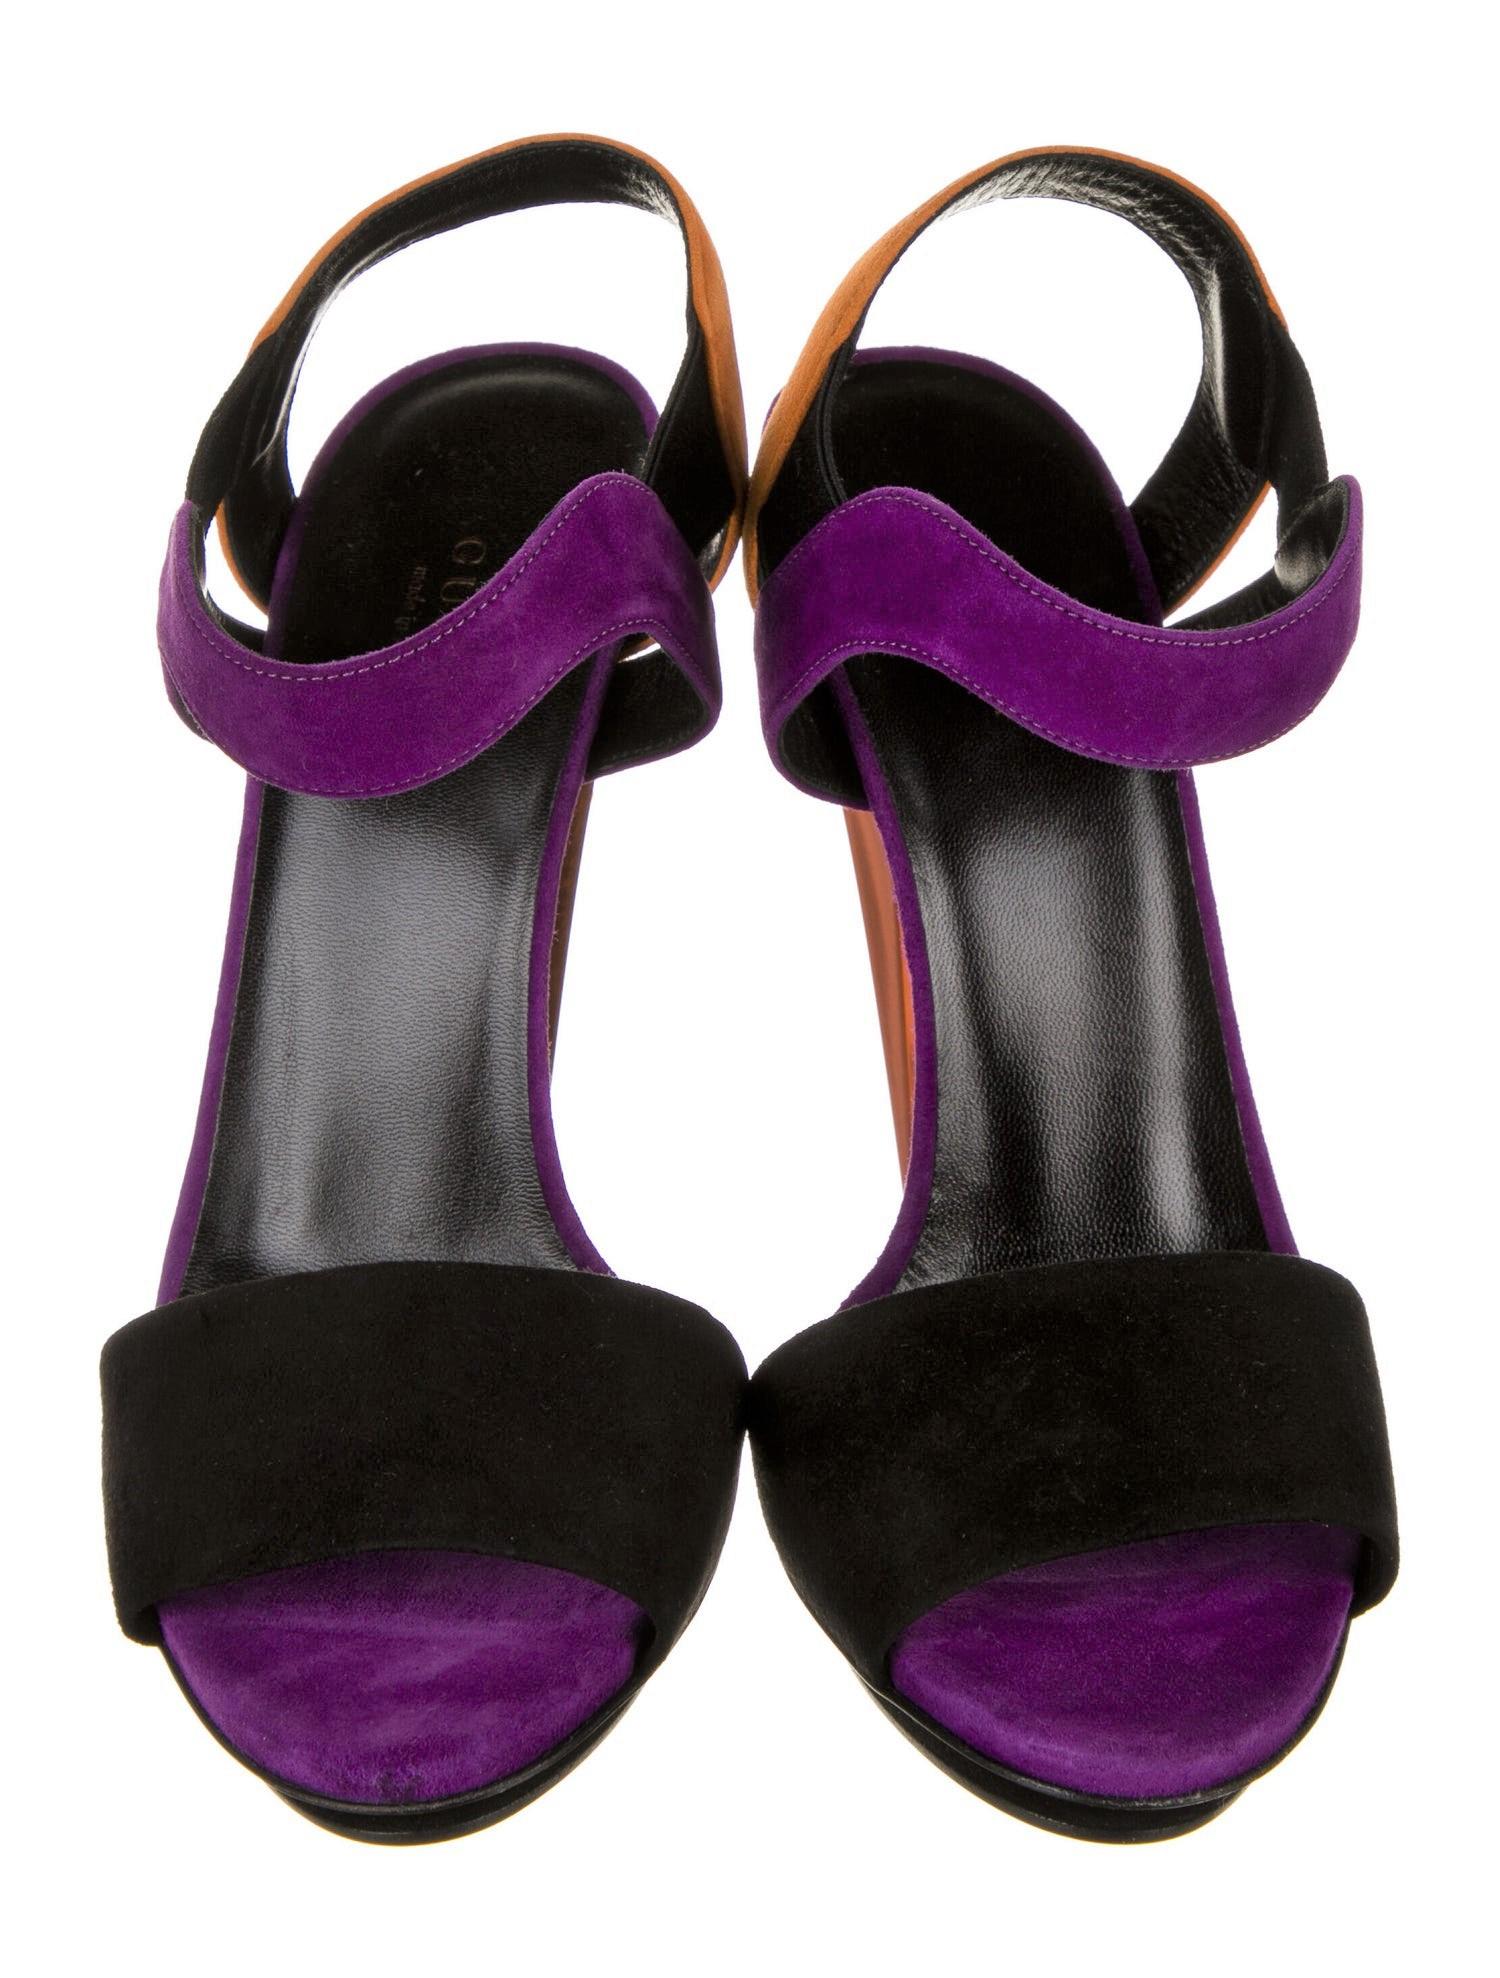 New Gucci Ad Runway 2014 Purple Orange Suede Mirrored Pump Heels Sz 38 For Sale 3